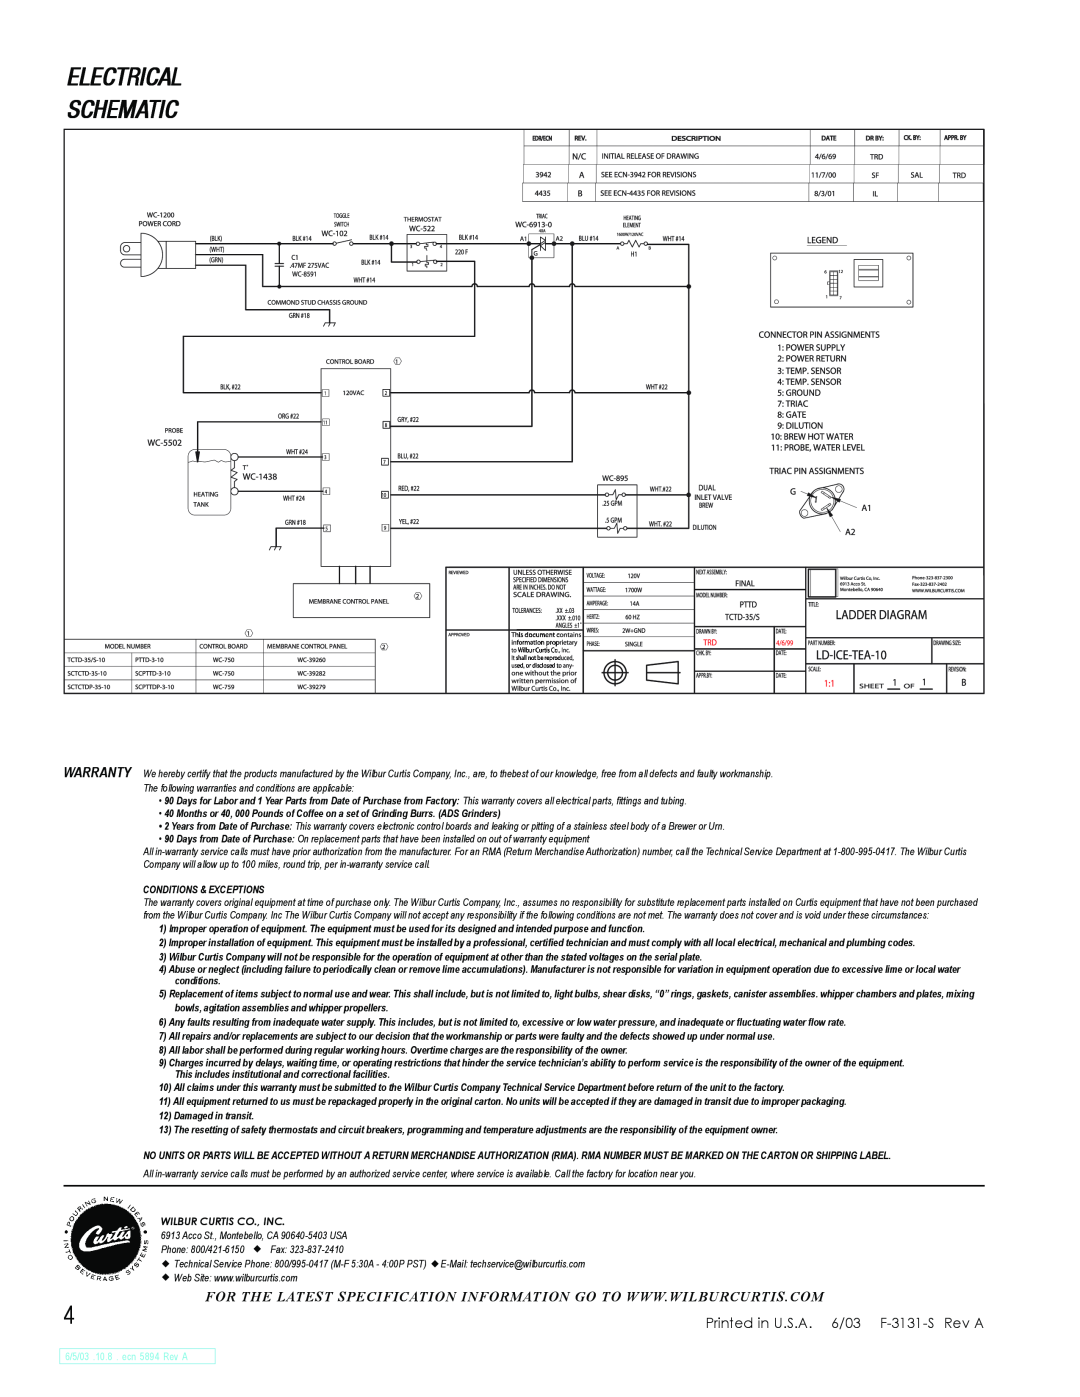 Wibur Curtis Company TCO-417, TCTD-35, TCO-421 Electrical Schematic, Wilbur Curtis Co., Inc, 6/5/03 .10.8 . ecn 5894 Rev A 